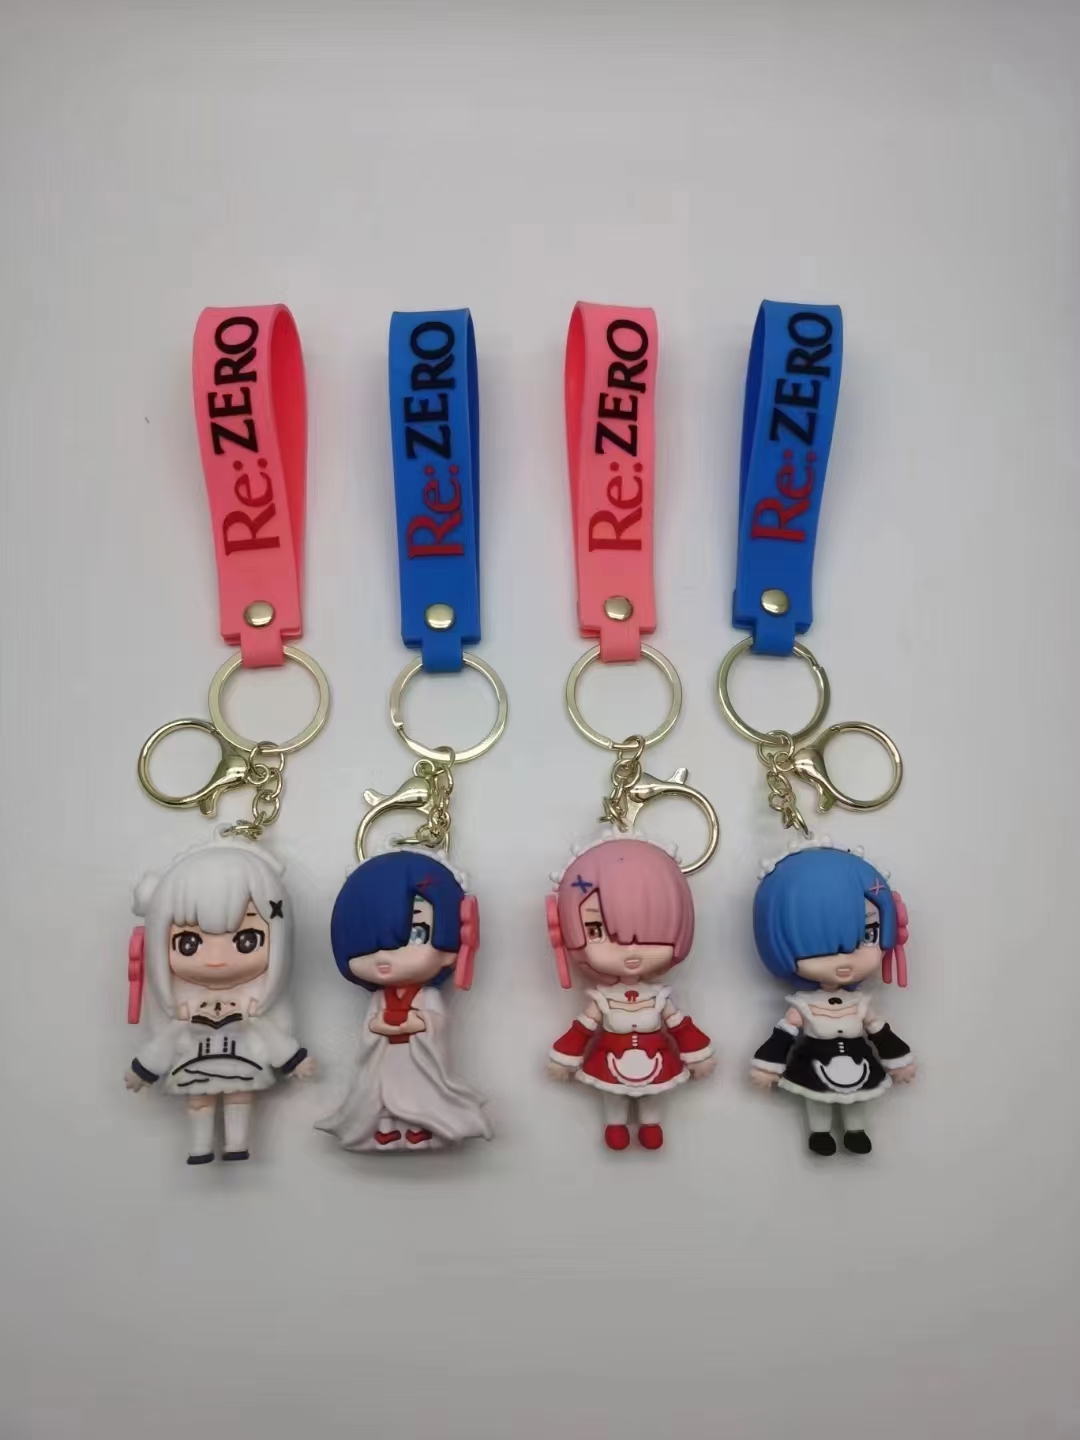 re zero anime figure keychain price for 1 pcs